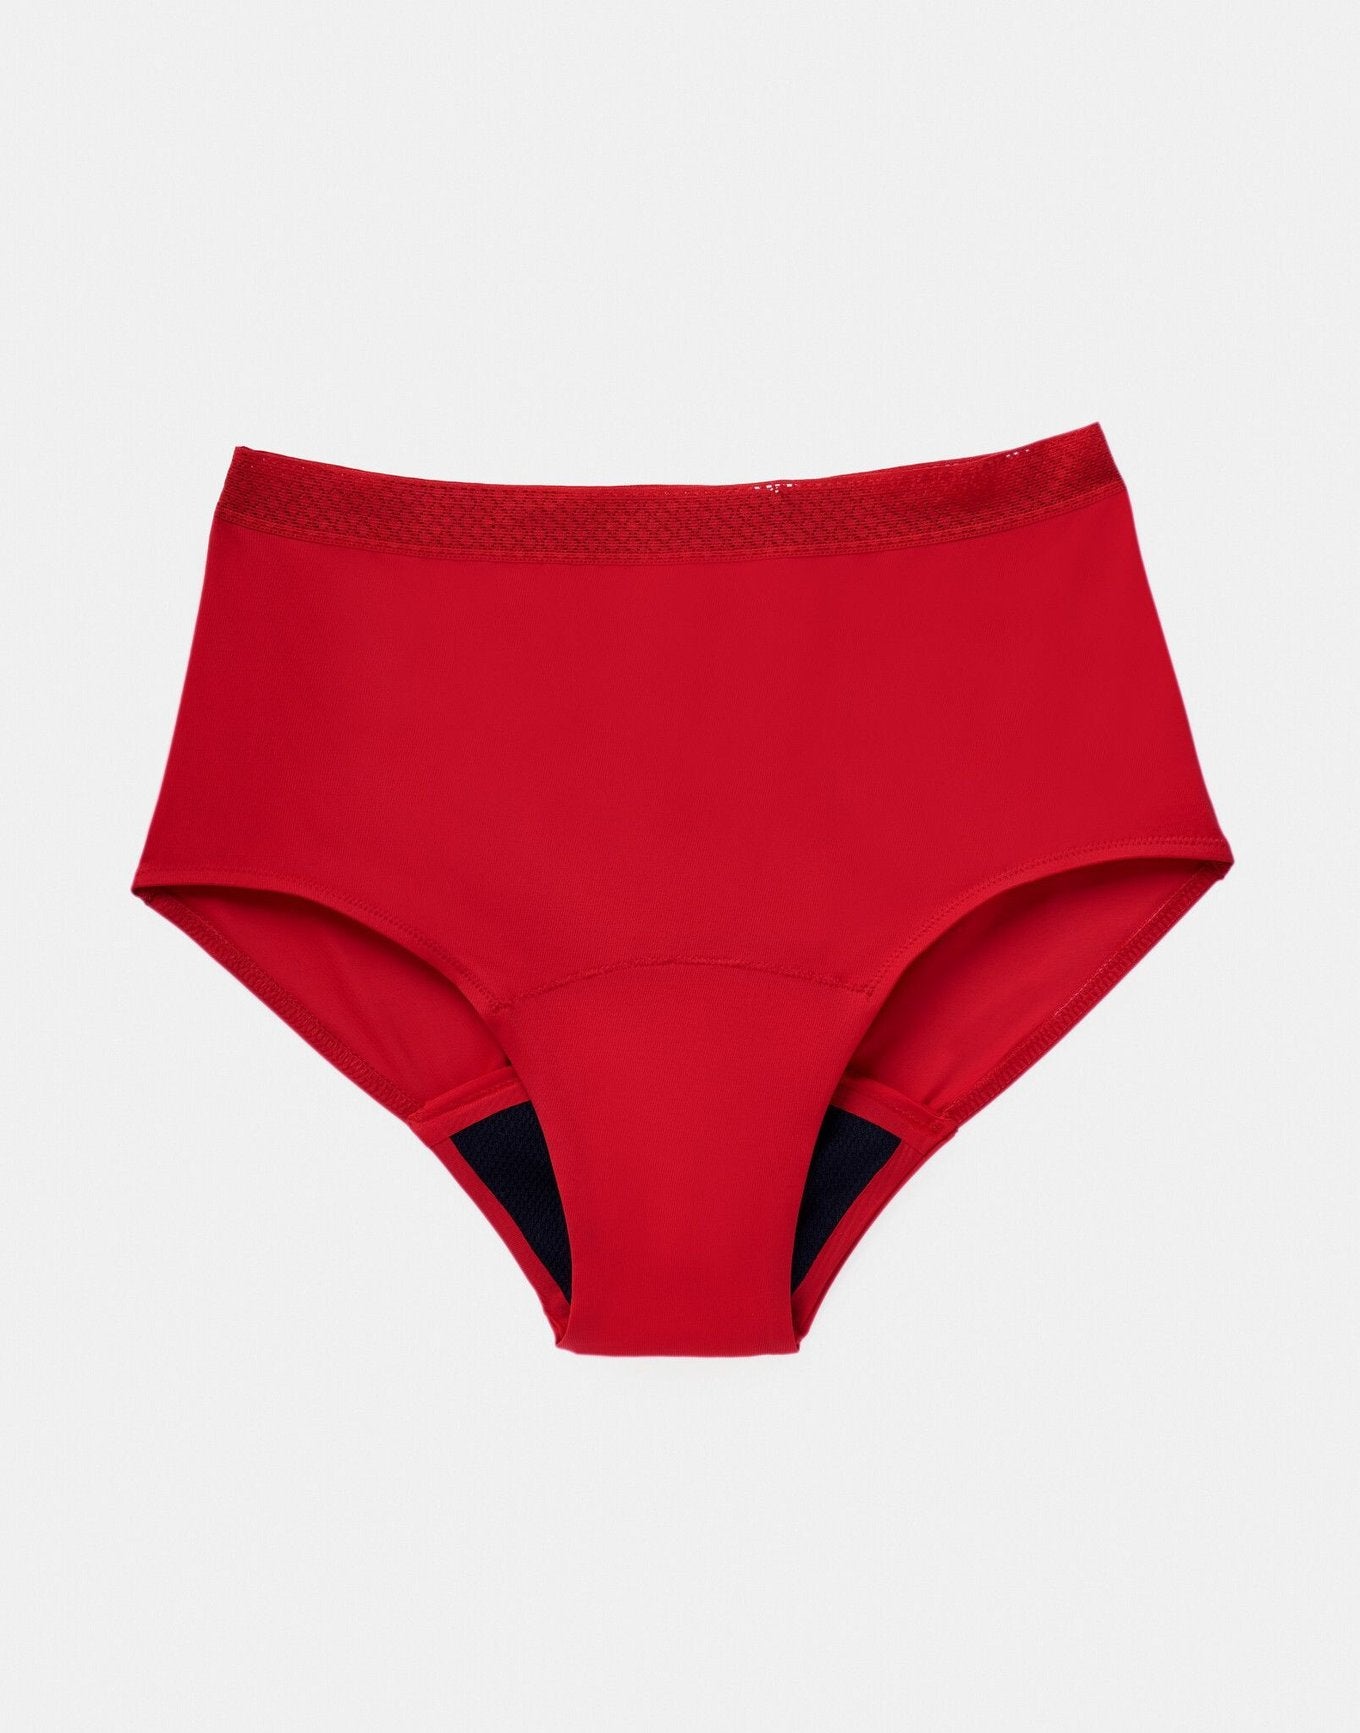 Goji Panties- Period Proof Panties ( Whole sale possible) at Rs 950/piece, Women Underwear in Delhi